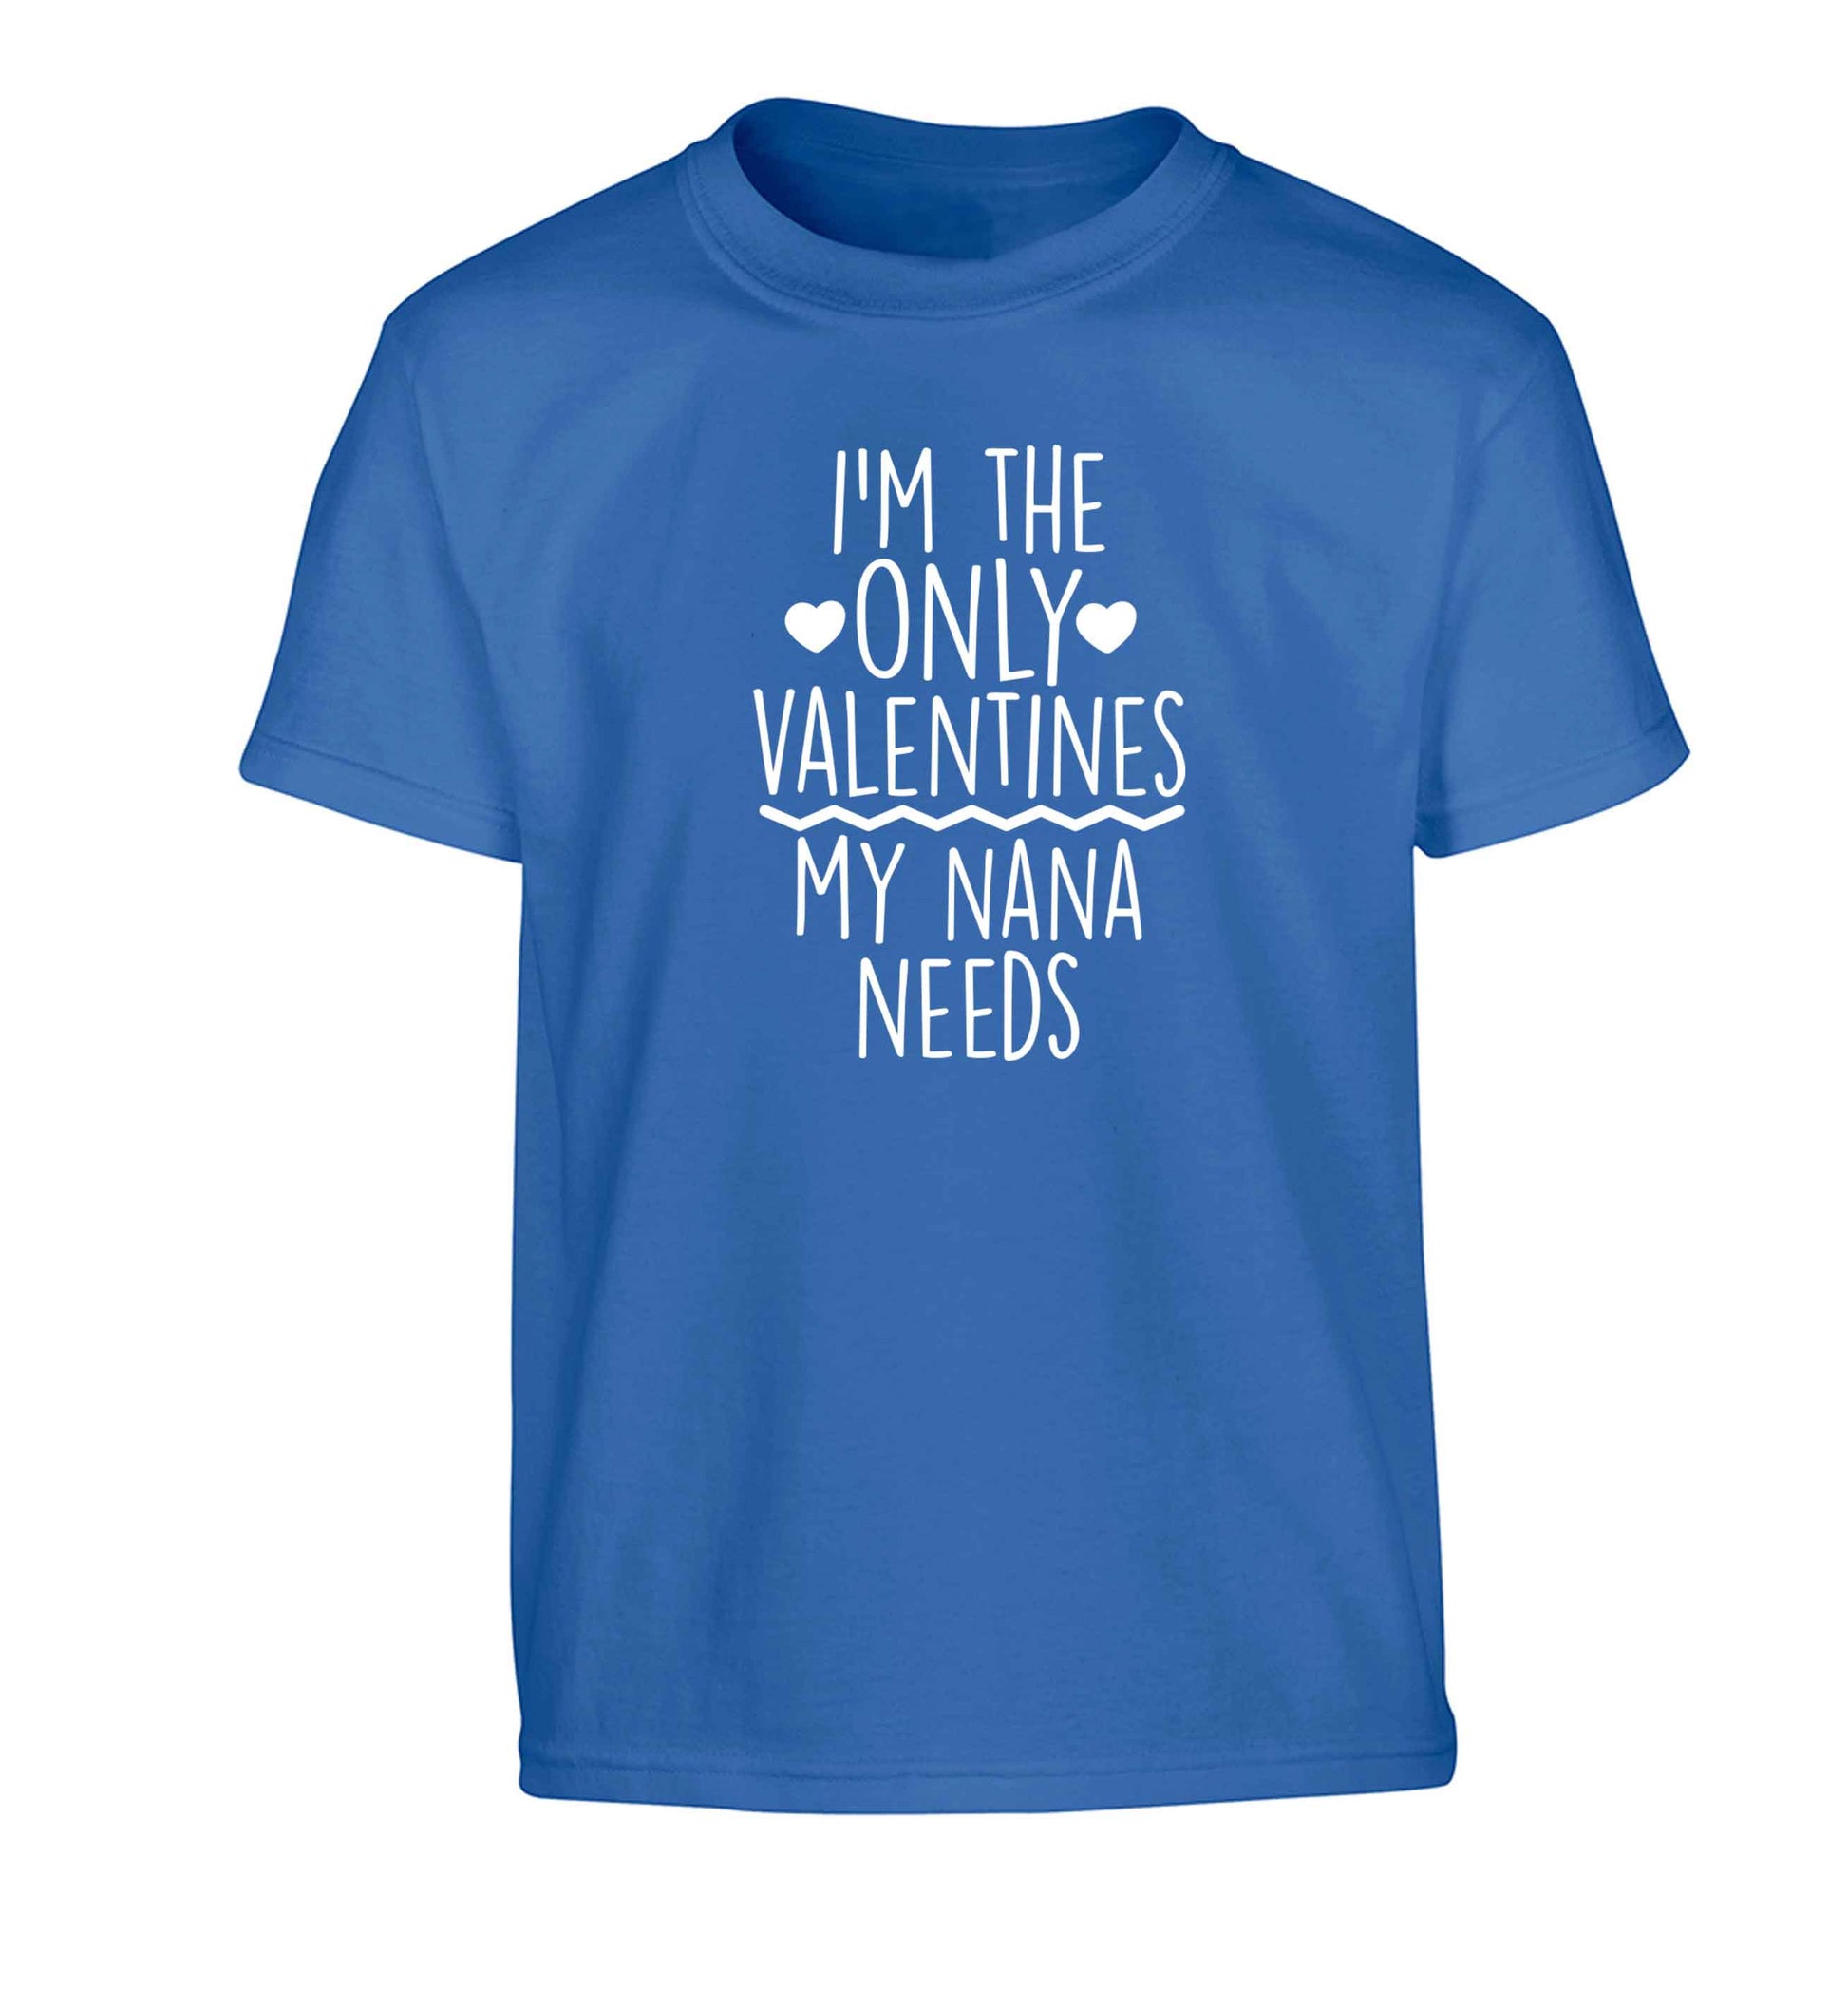 I'm the only valentines my nana needs Children's blue Tshirt 12-13 Years